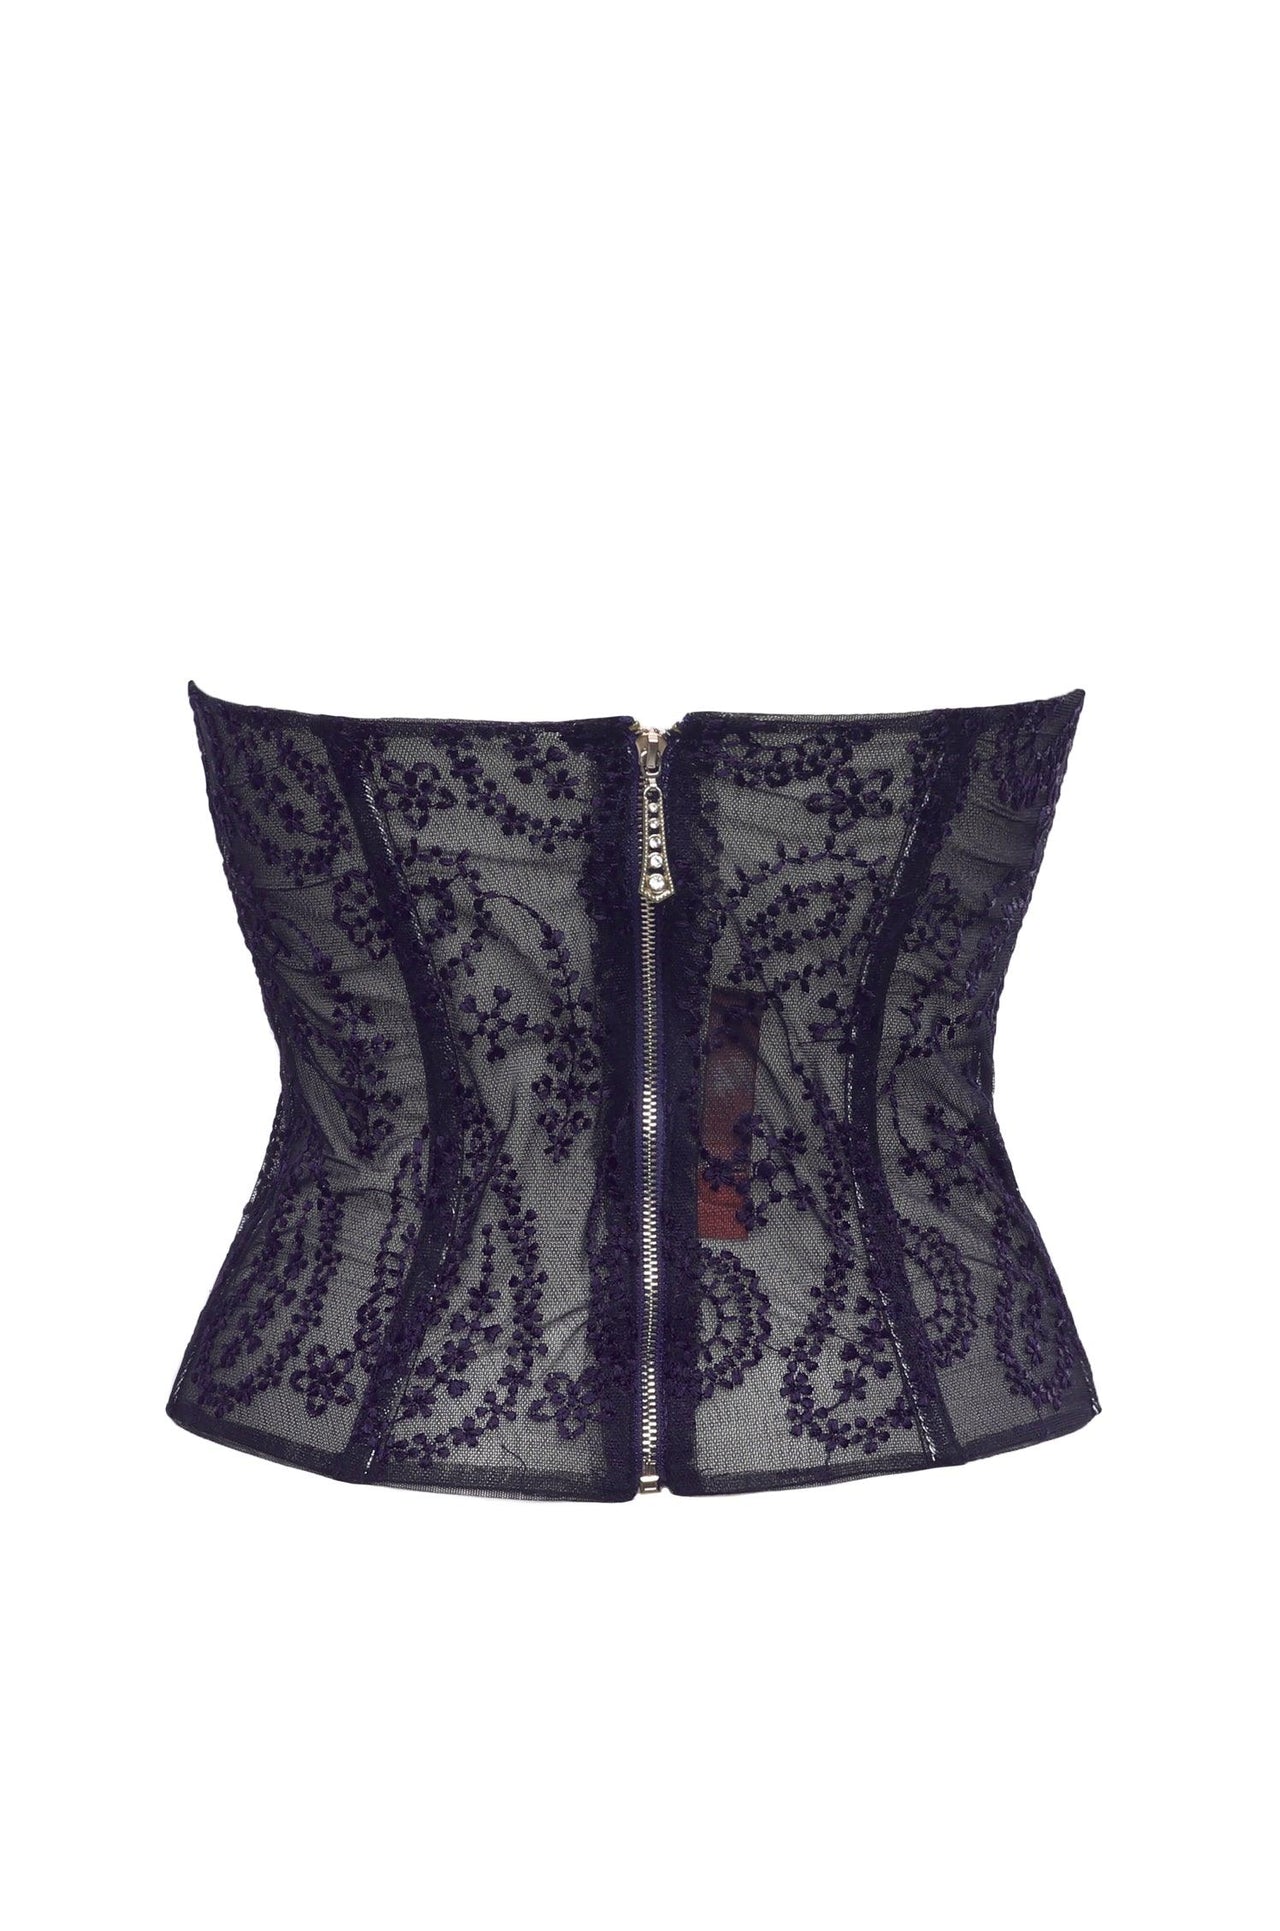 Maria-Theresien corset - J I Λ atelier